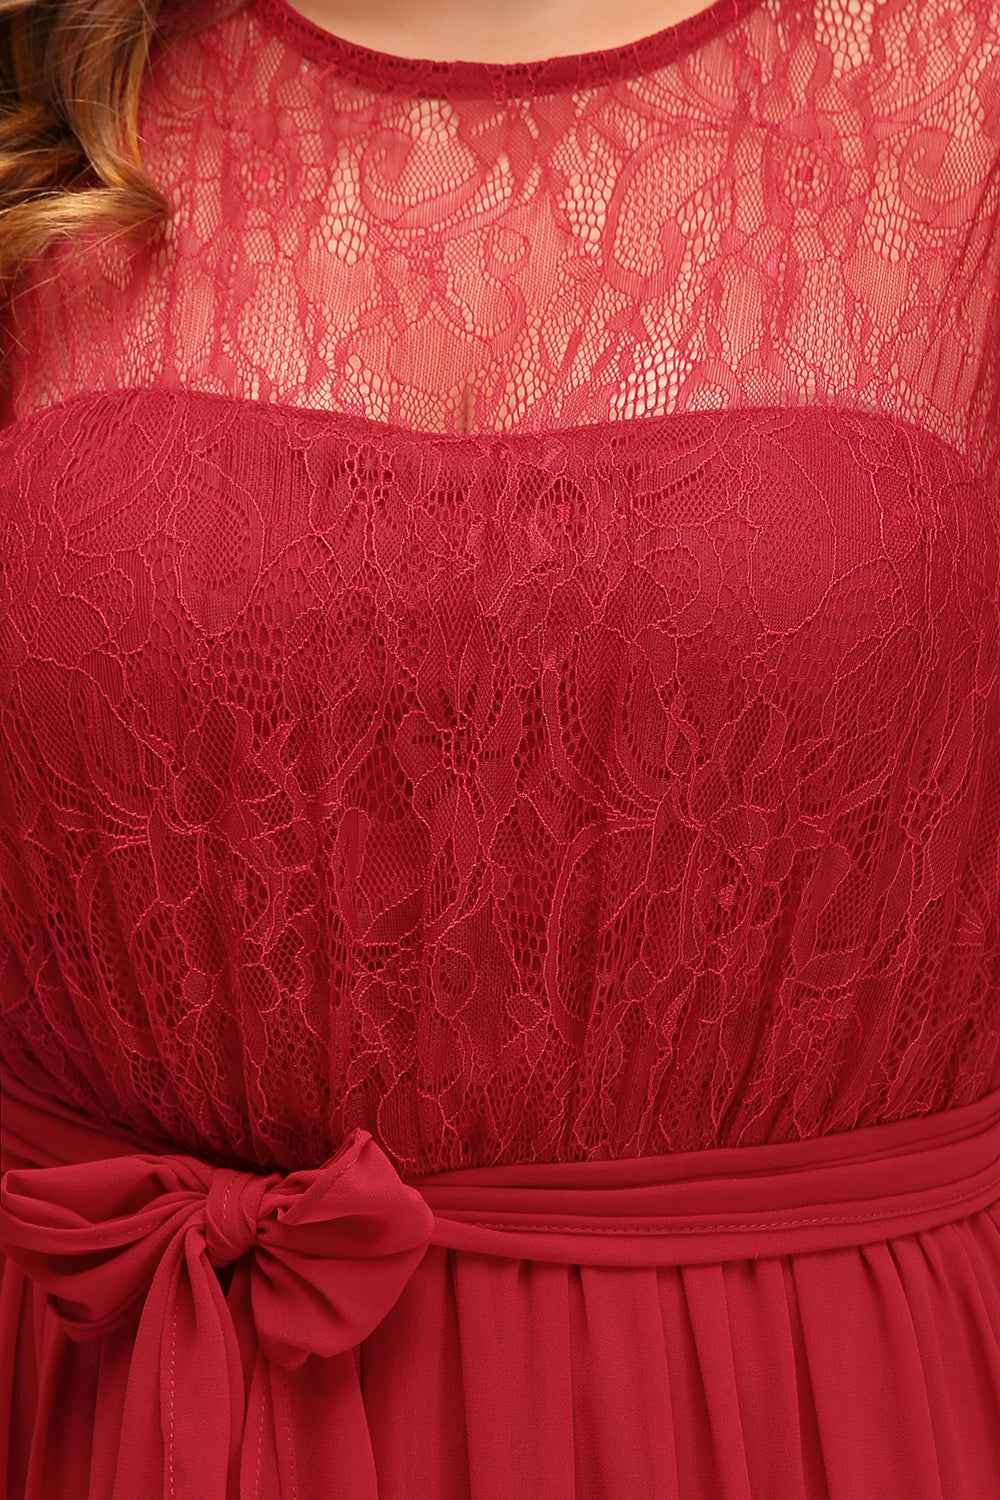 Plus Size Jewel Sleeveless Red Lace Long Bridesmaid Dress with Ruffle-27dress